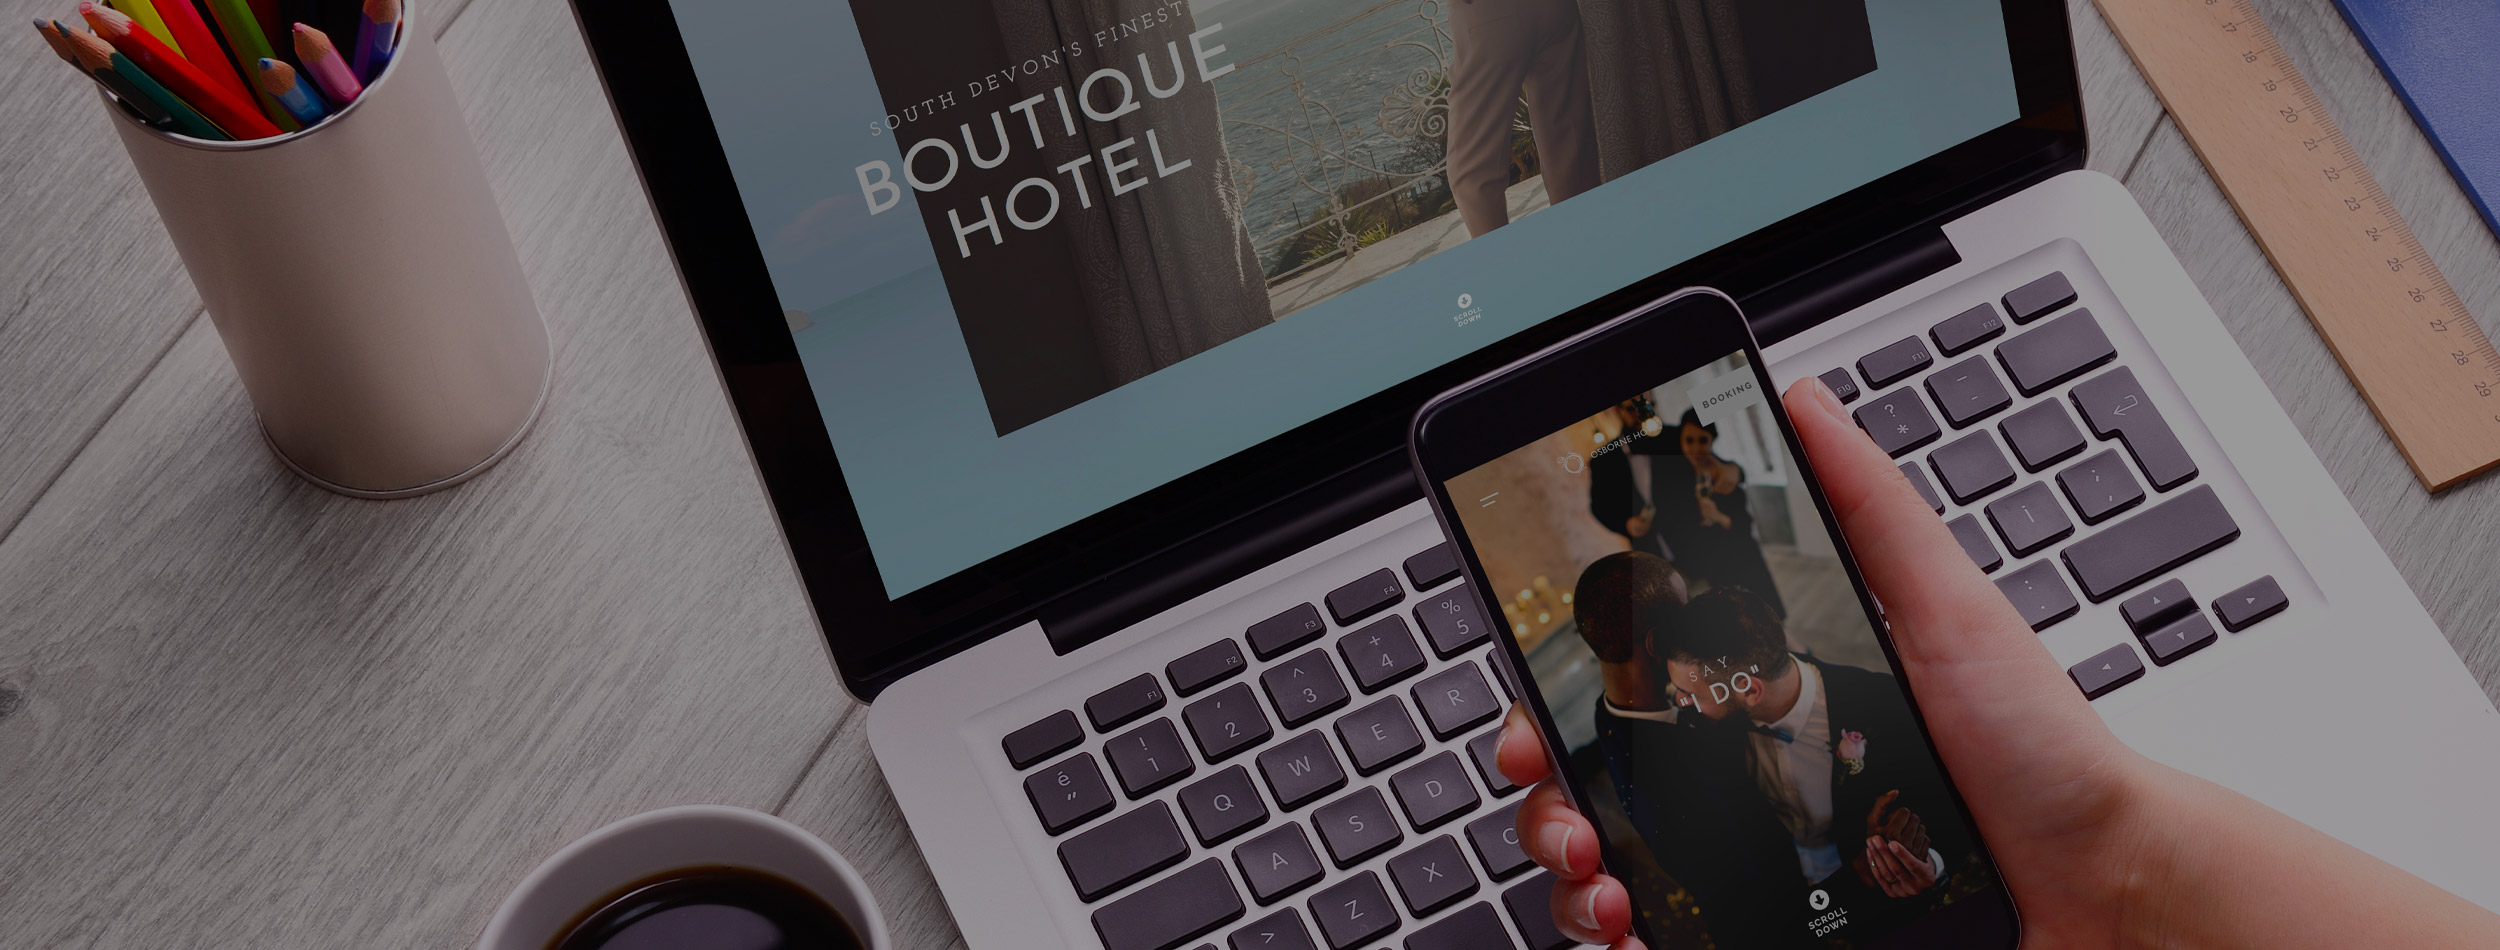 Osborne Hotel Bespoke Website Development by Inventive